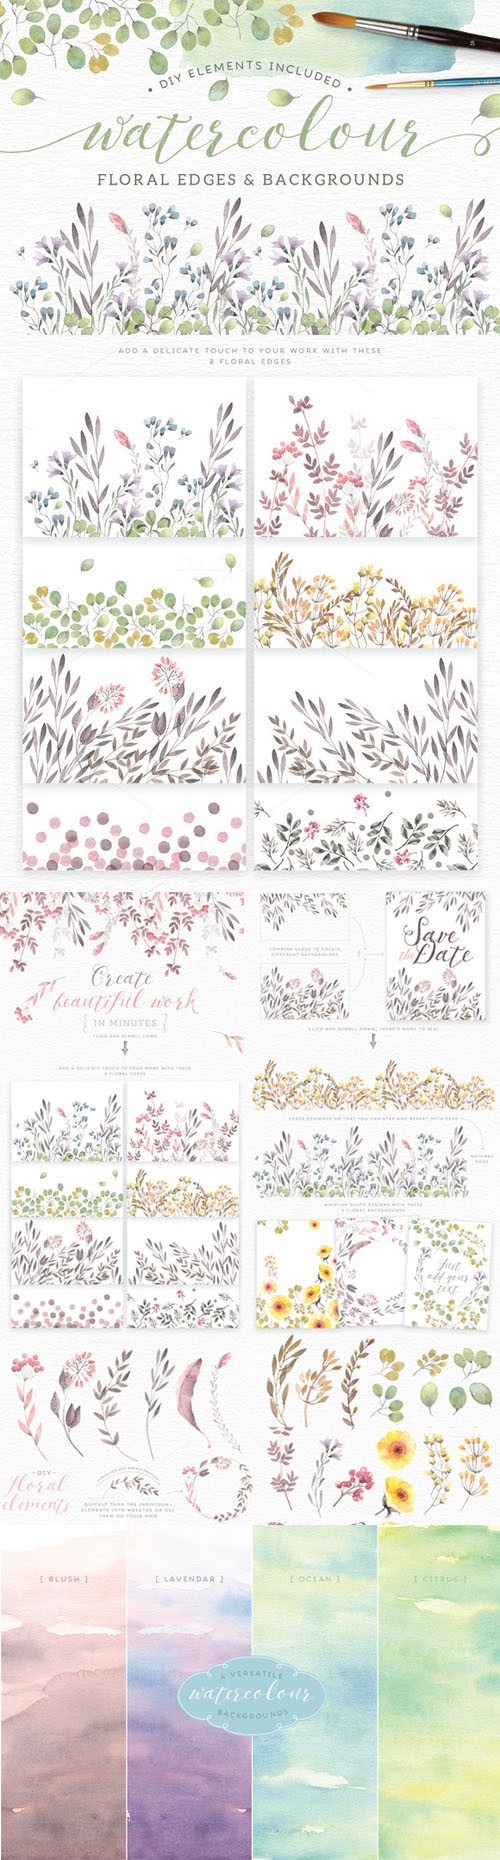 Creativemarket - Watercolor floral edges+backgrounds 244367